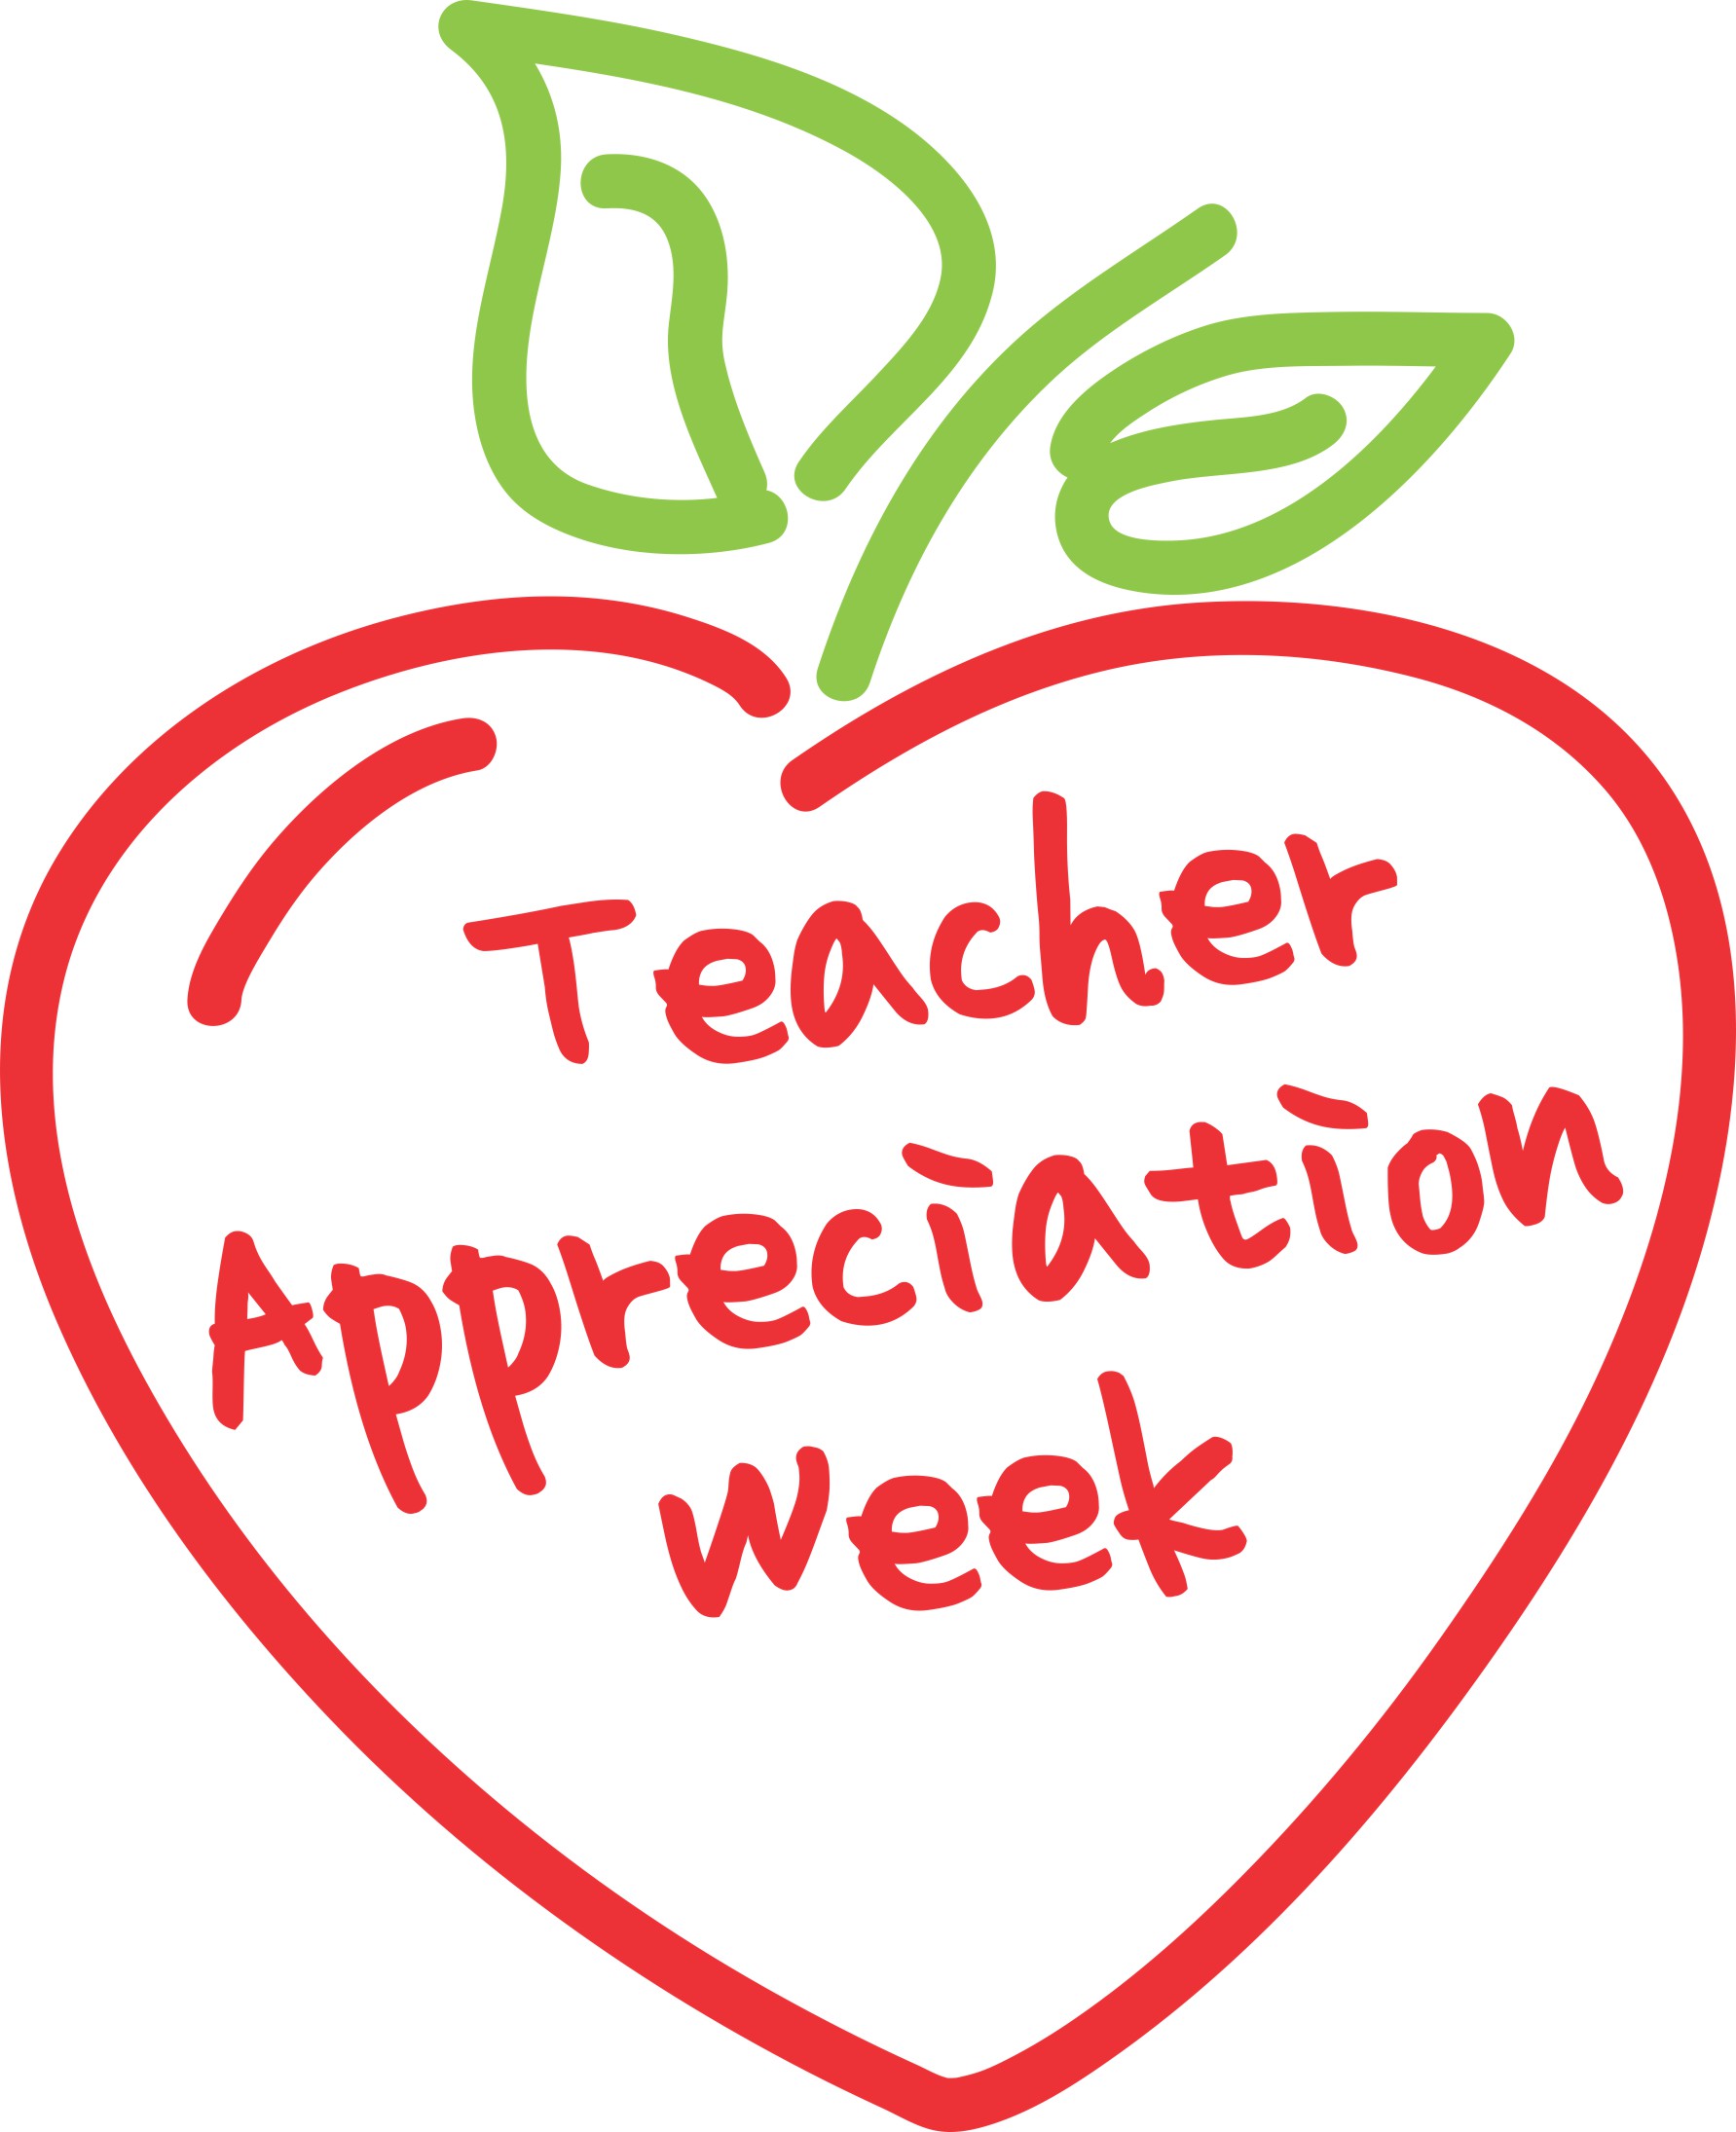 19-awesome-ways-to-show-teacher-appreciation-momadvice